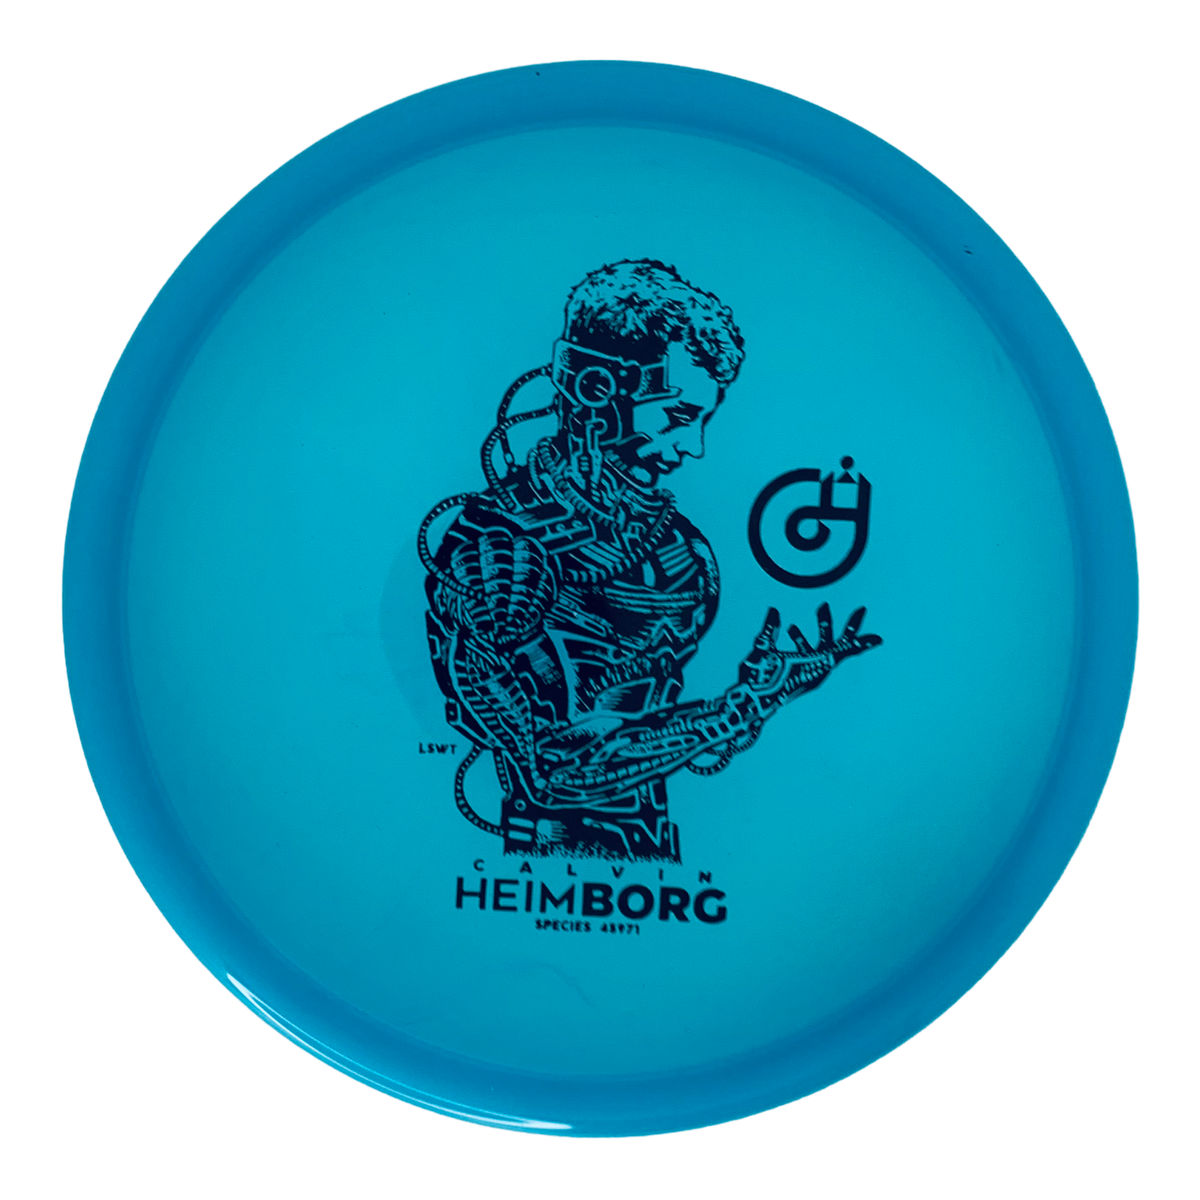 Innova Champion Toro - HeimBORG